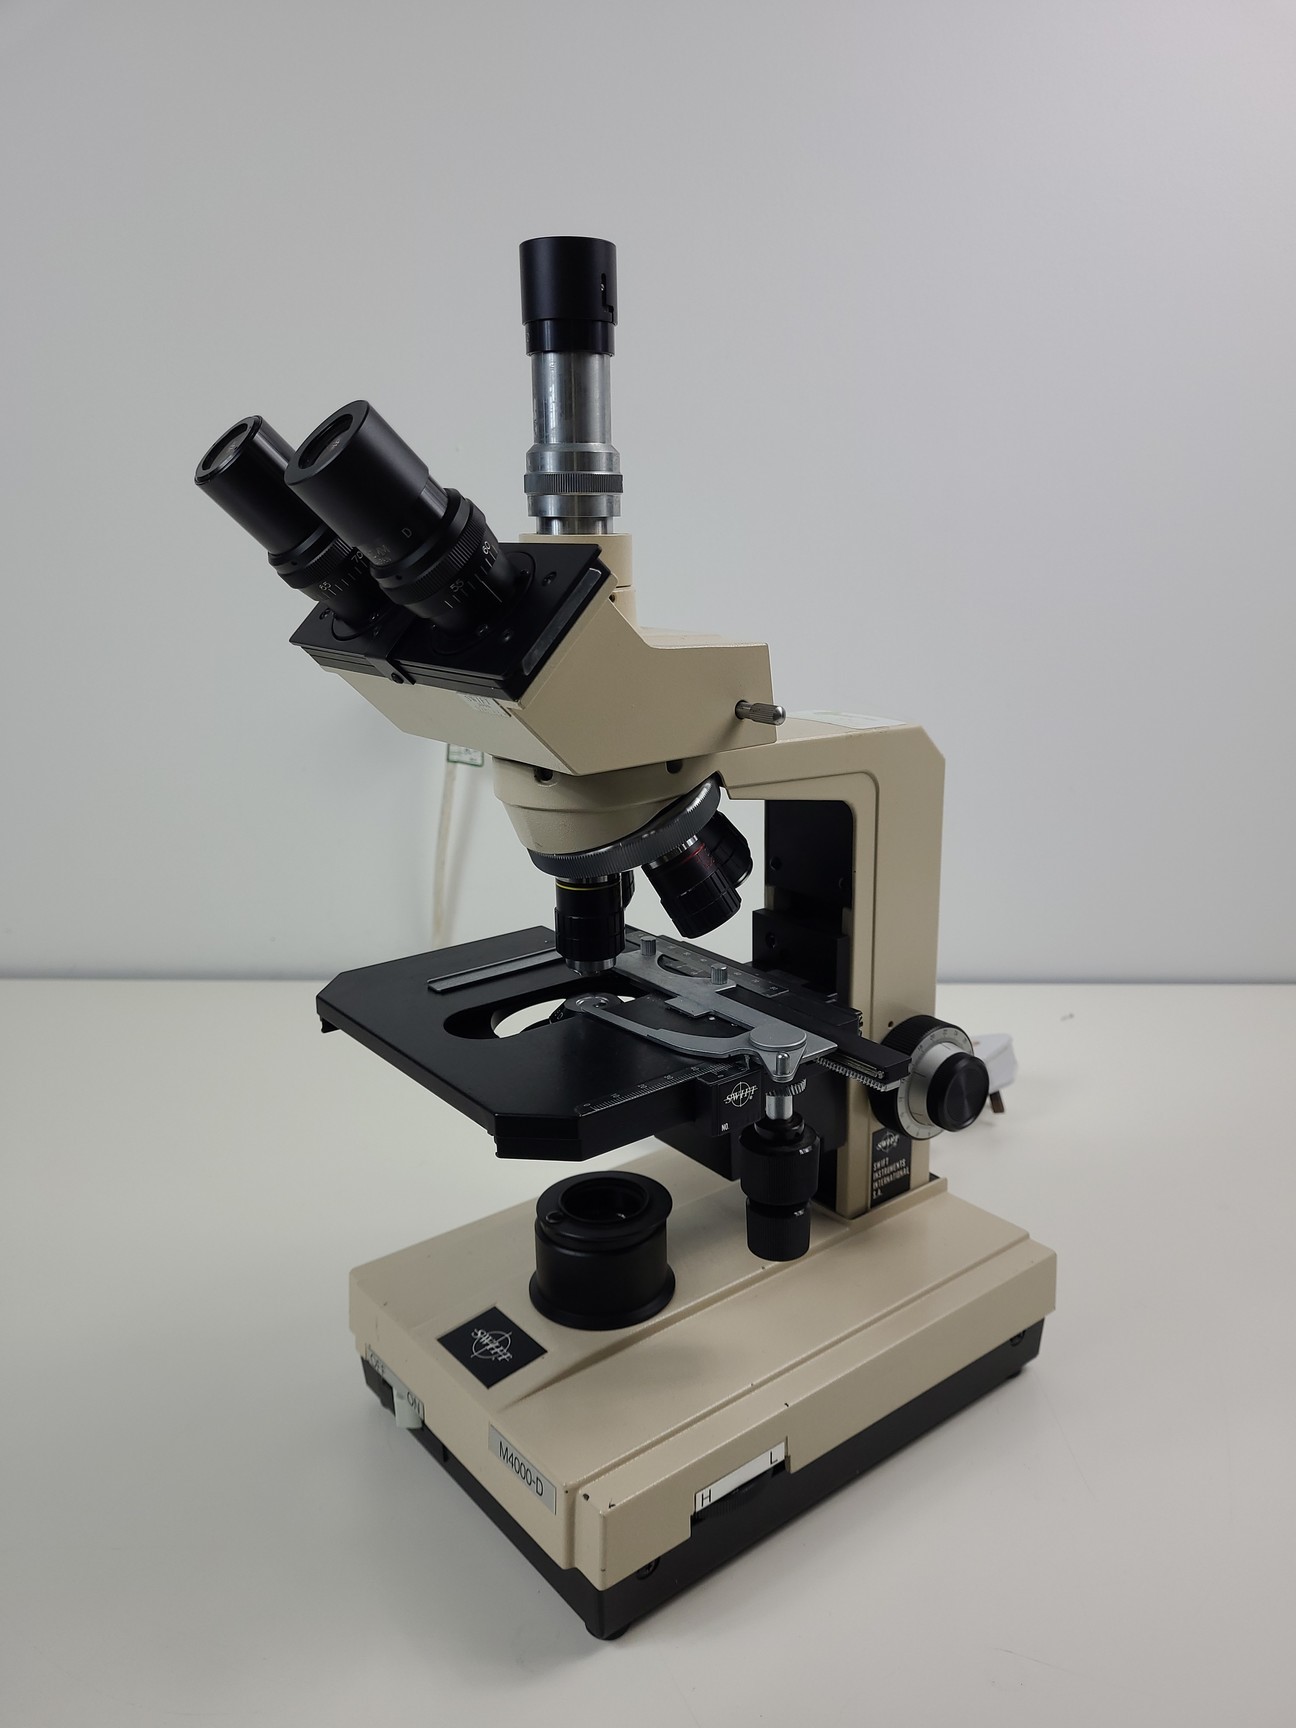 Swift M4000-D Microscope & 4 Objectives 100/1.25 40/0.65 10/0.25 4/0.10 Lab